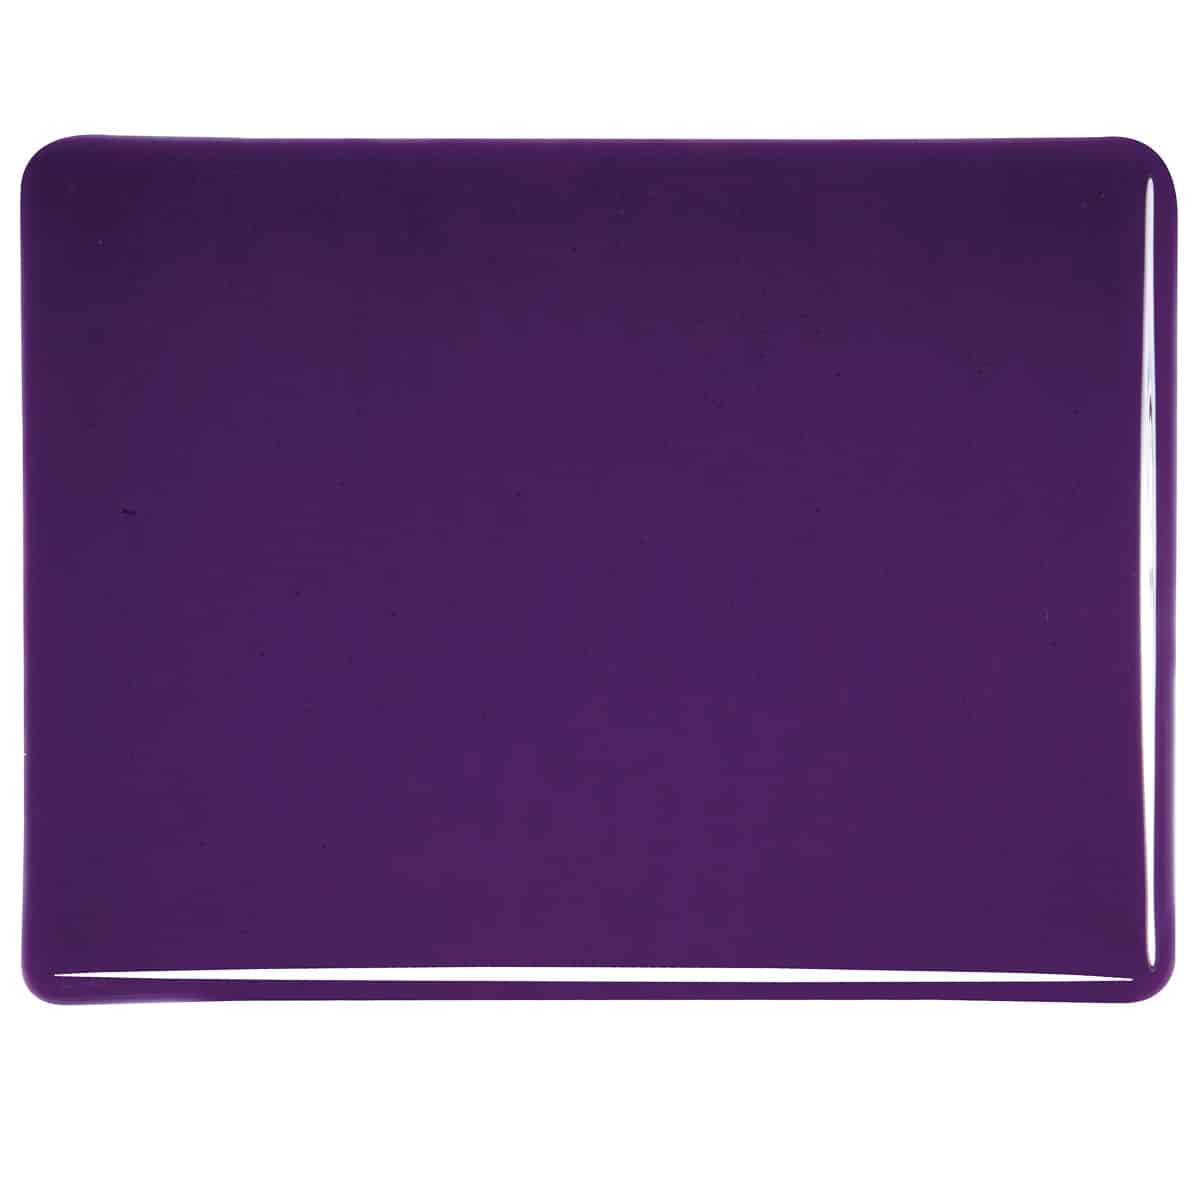 001128 Deep Royal Purple Transparent sheet glass swatch